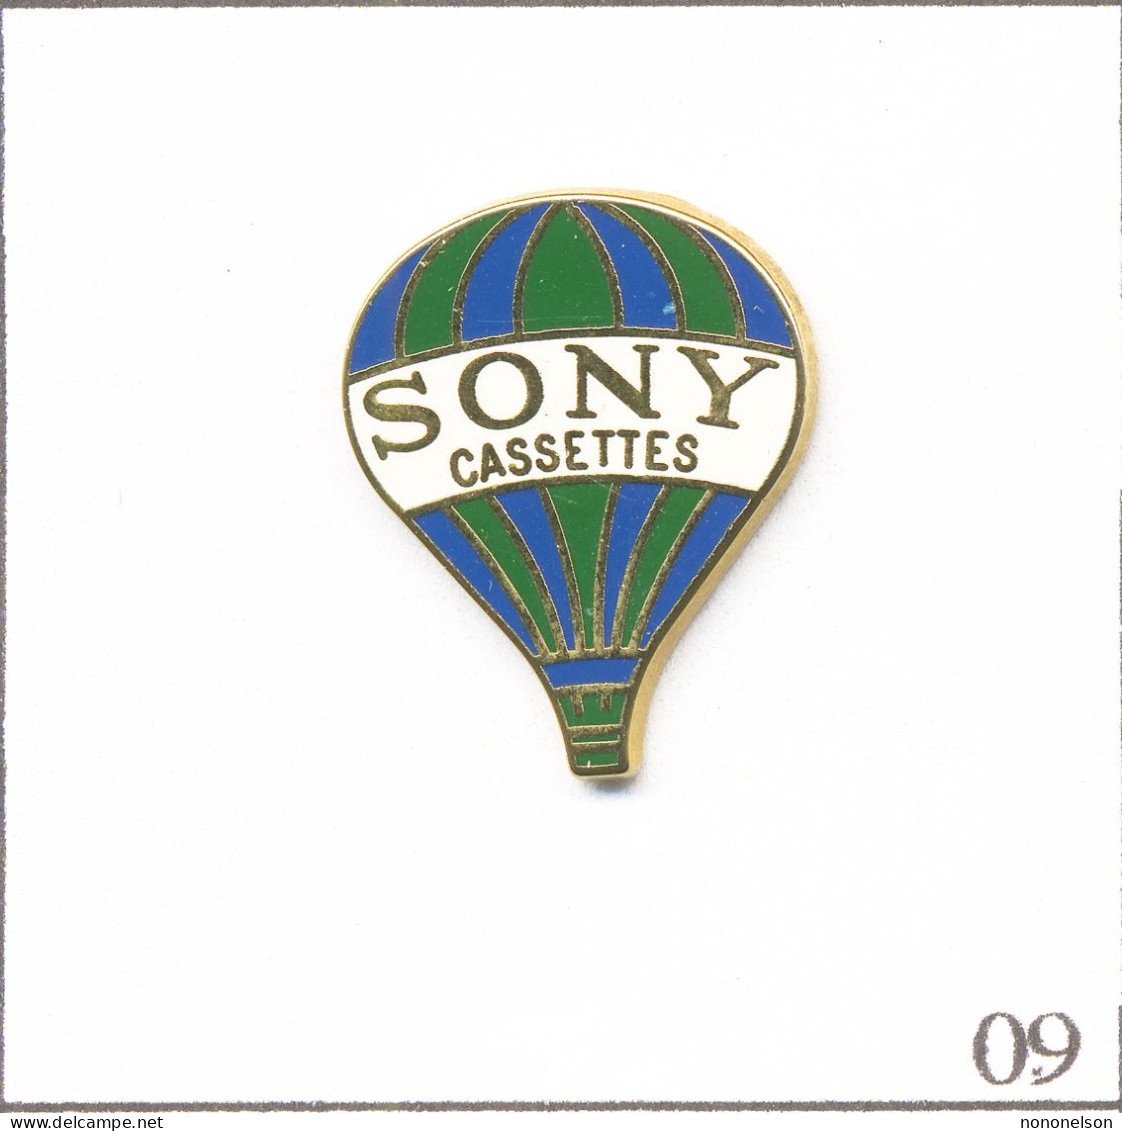 Pin's Transport - Montgolfière / Ballon “Sony“ - Rayures Vertes Et Bleues. Est. Sony 1989. Zamac. T953-09 - Airships